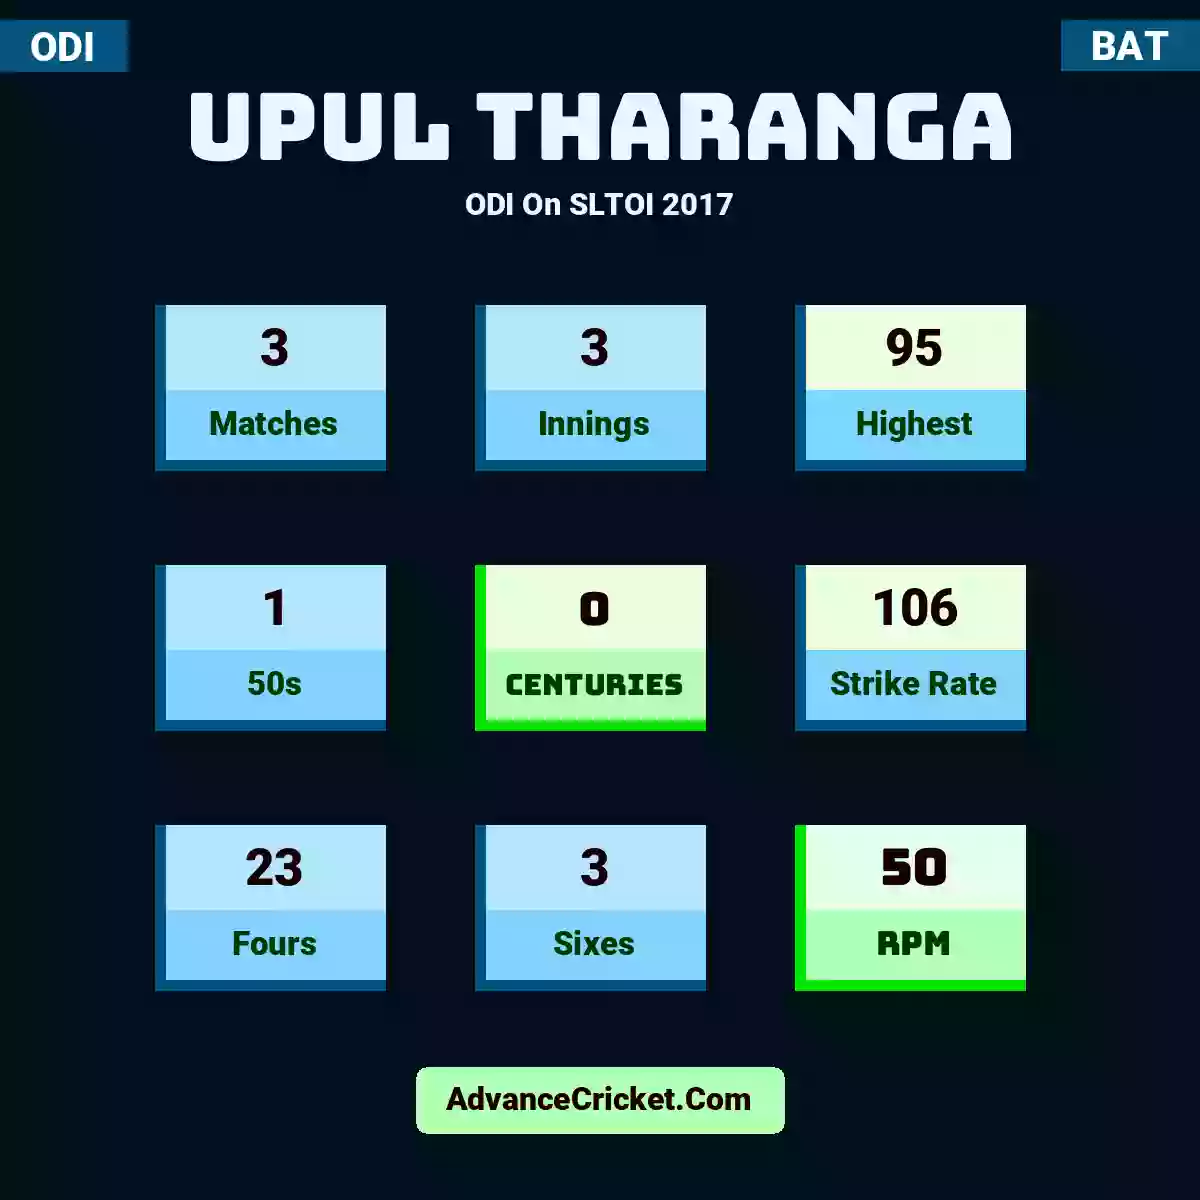 Upul Tharanga ODI  On SLTOI 2017, Upul Tharanga played 3 matches, scored 95 runs as highest, 1 half-centuries, and 0 centuries, with a strike rate of 106. U.Tharanga hit 23 fours and 3 sixes, with an RPM of 50.